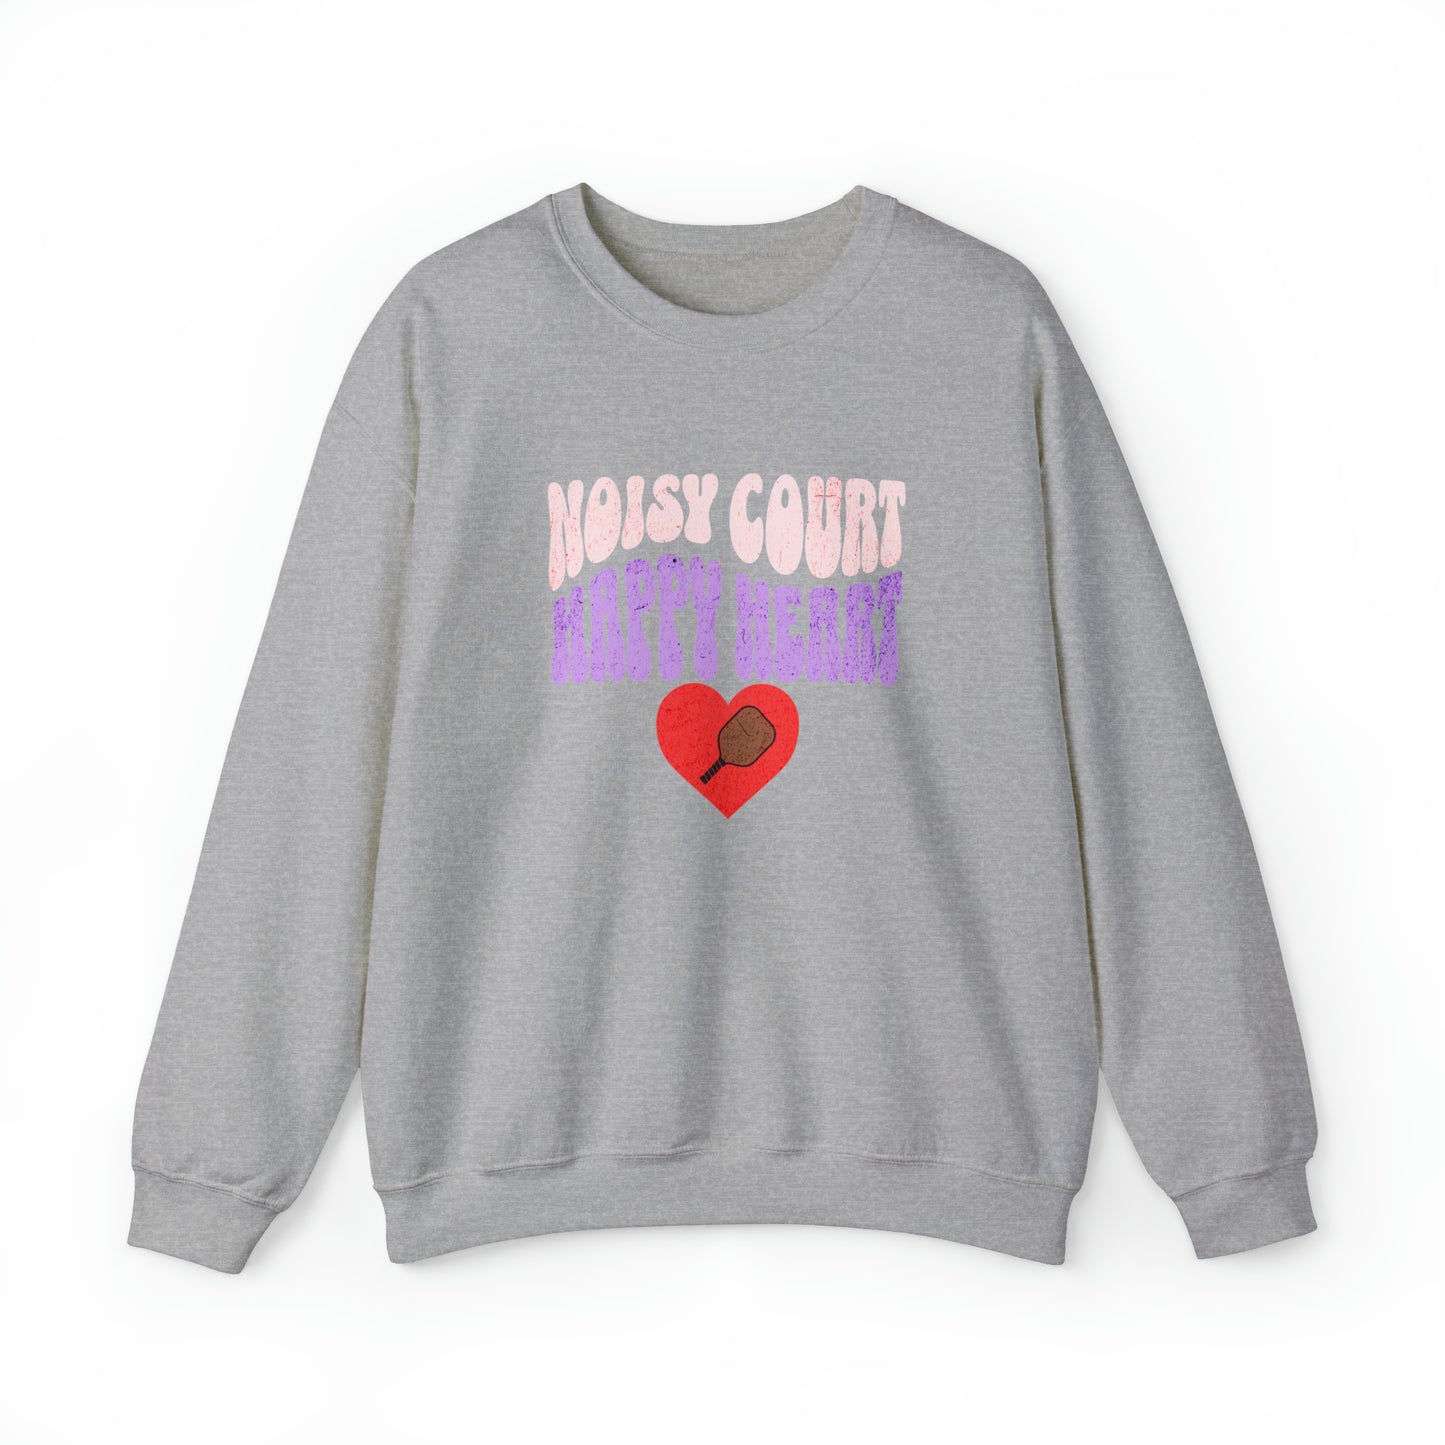 Noisey Court, Happy Heart Pickleball Noise Sweatshirt